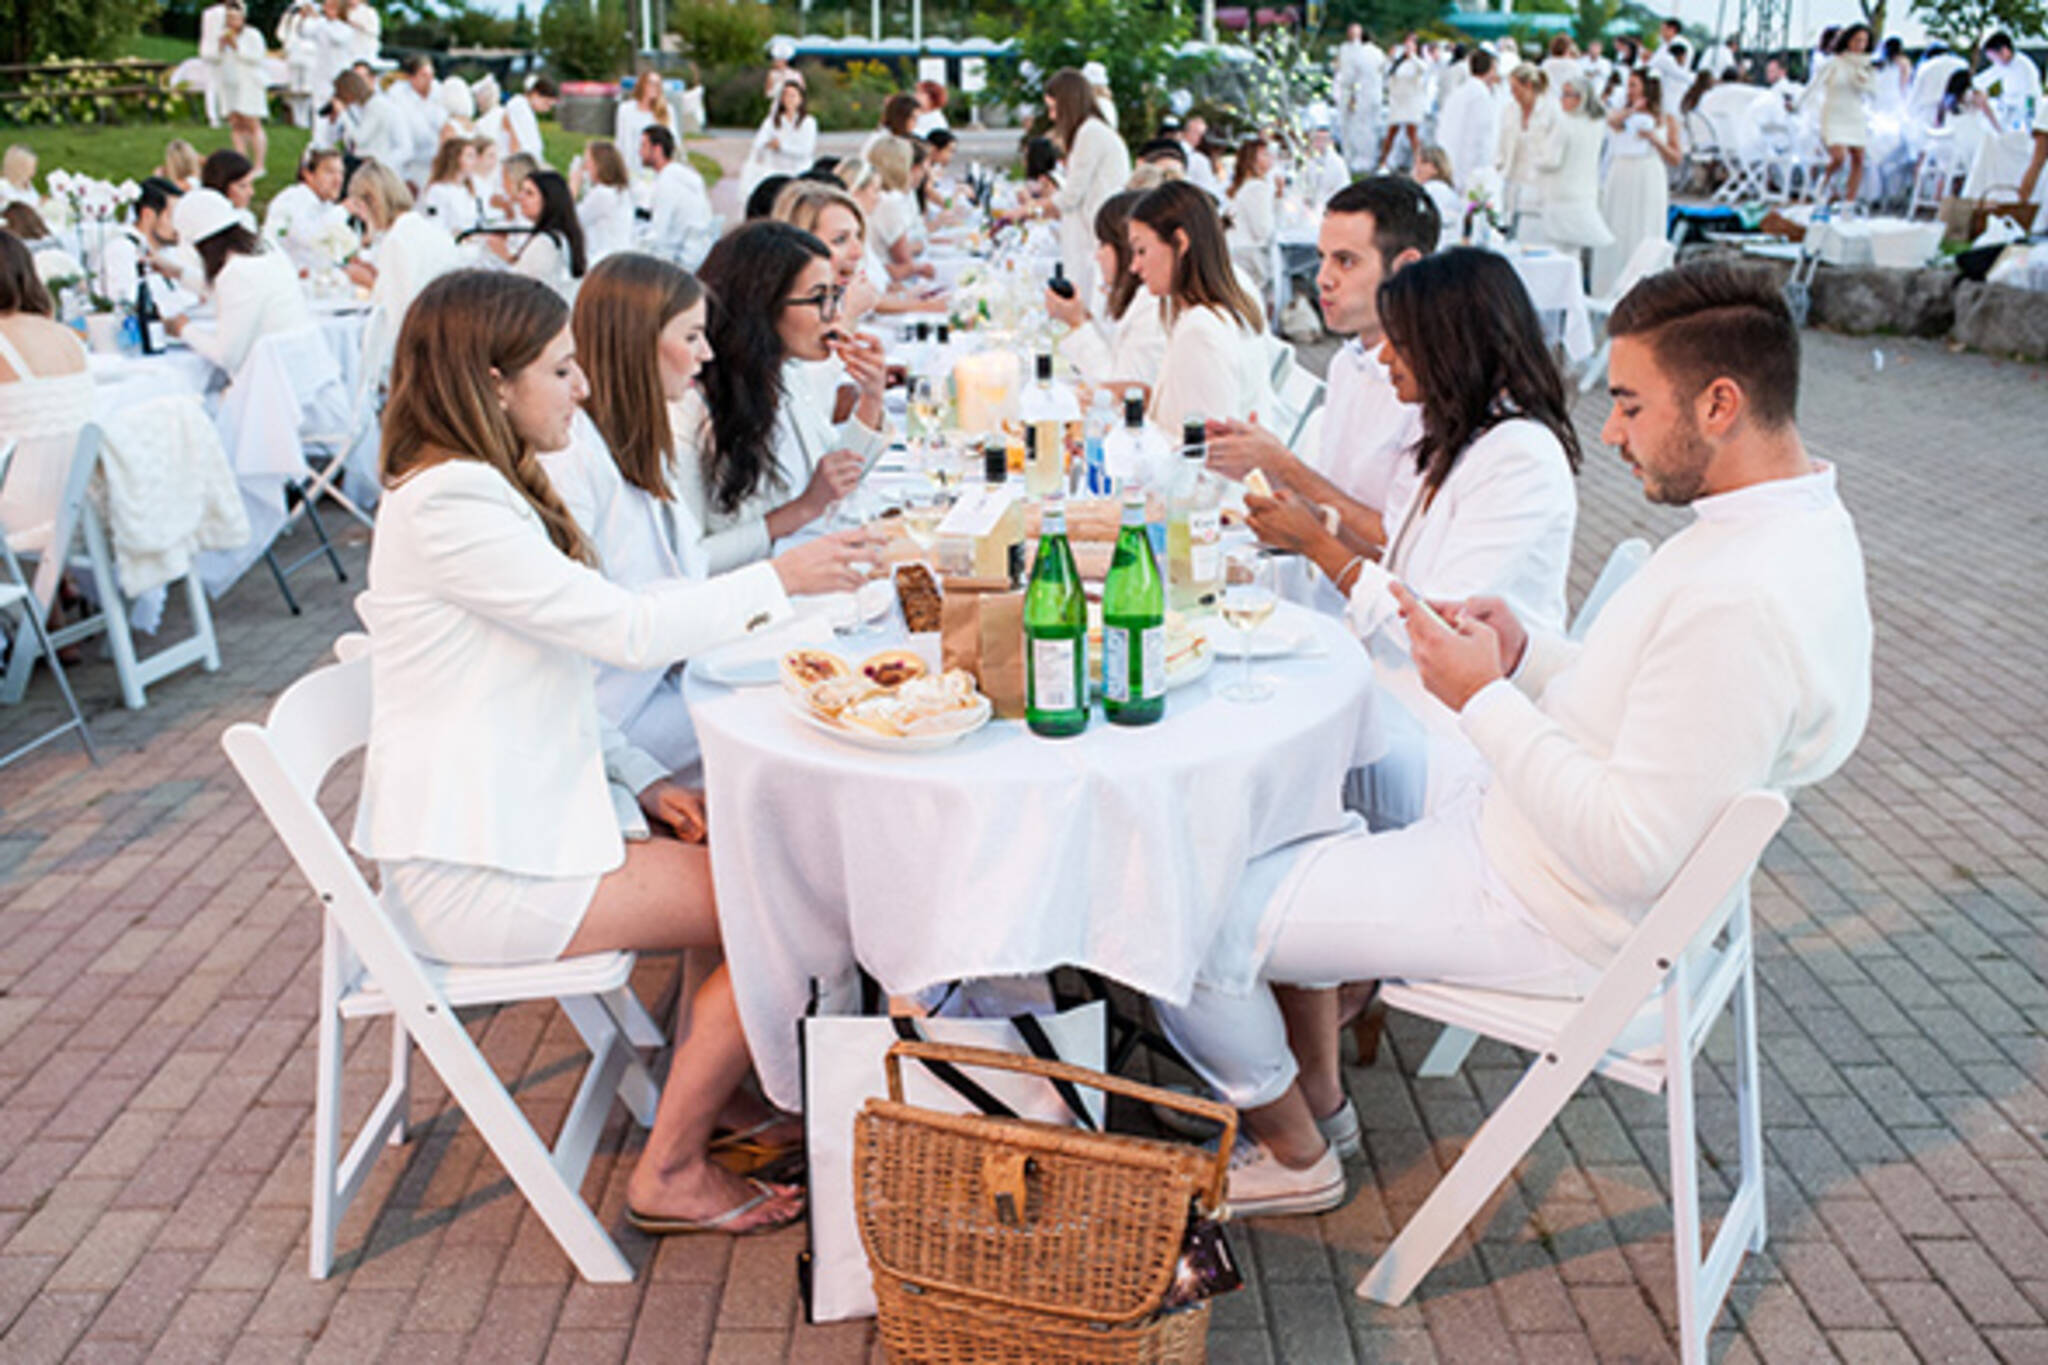 Diner en Blanc returns to Toronto this summer